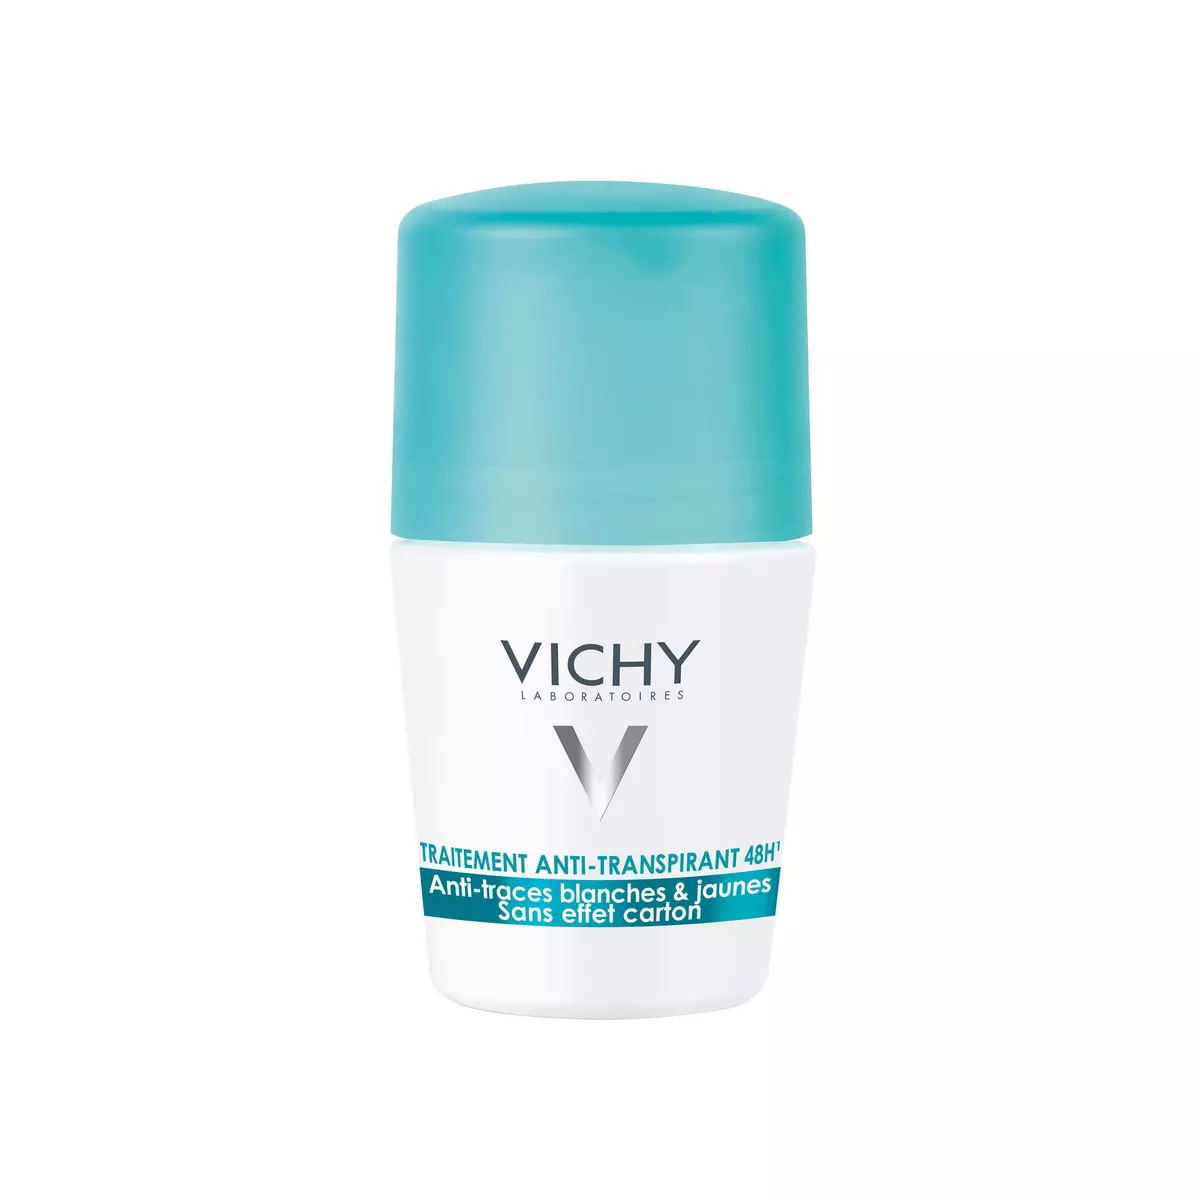 VICHY Déodorant traitement anti-transpirant 48h 50ml